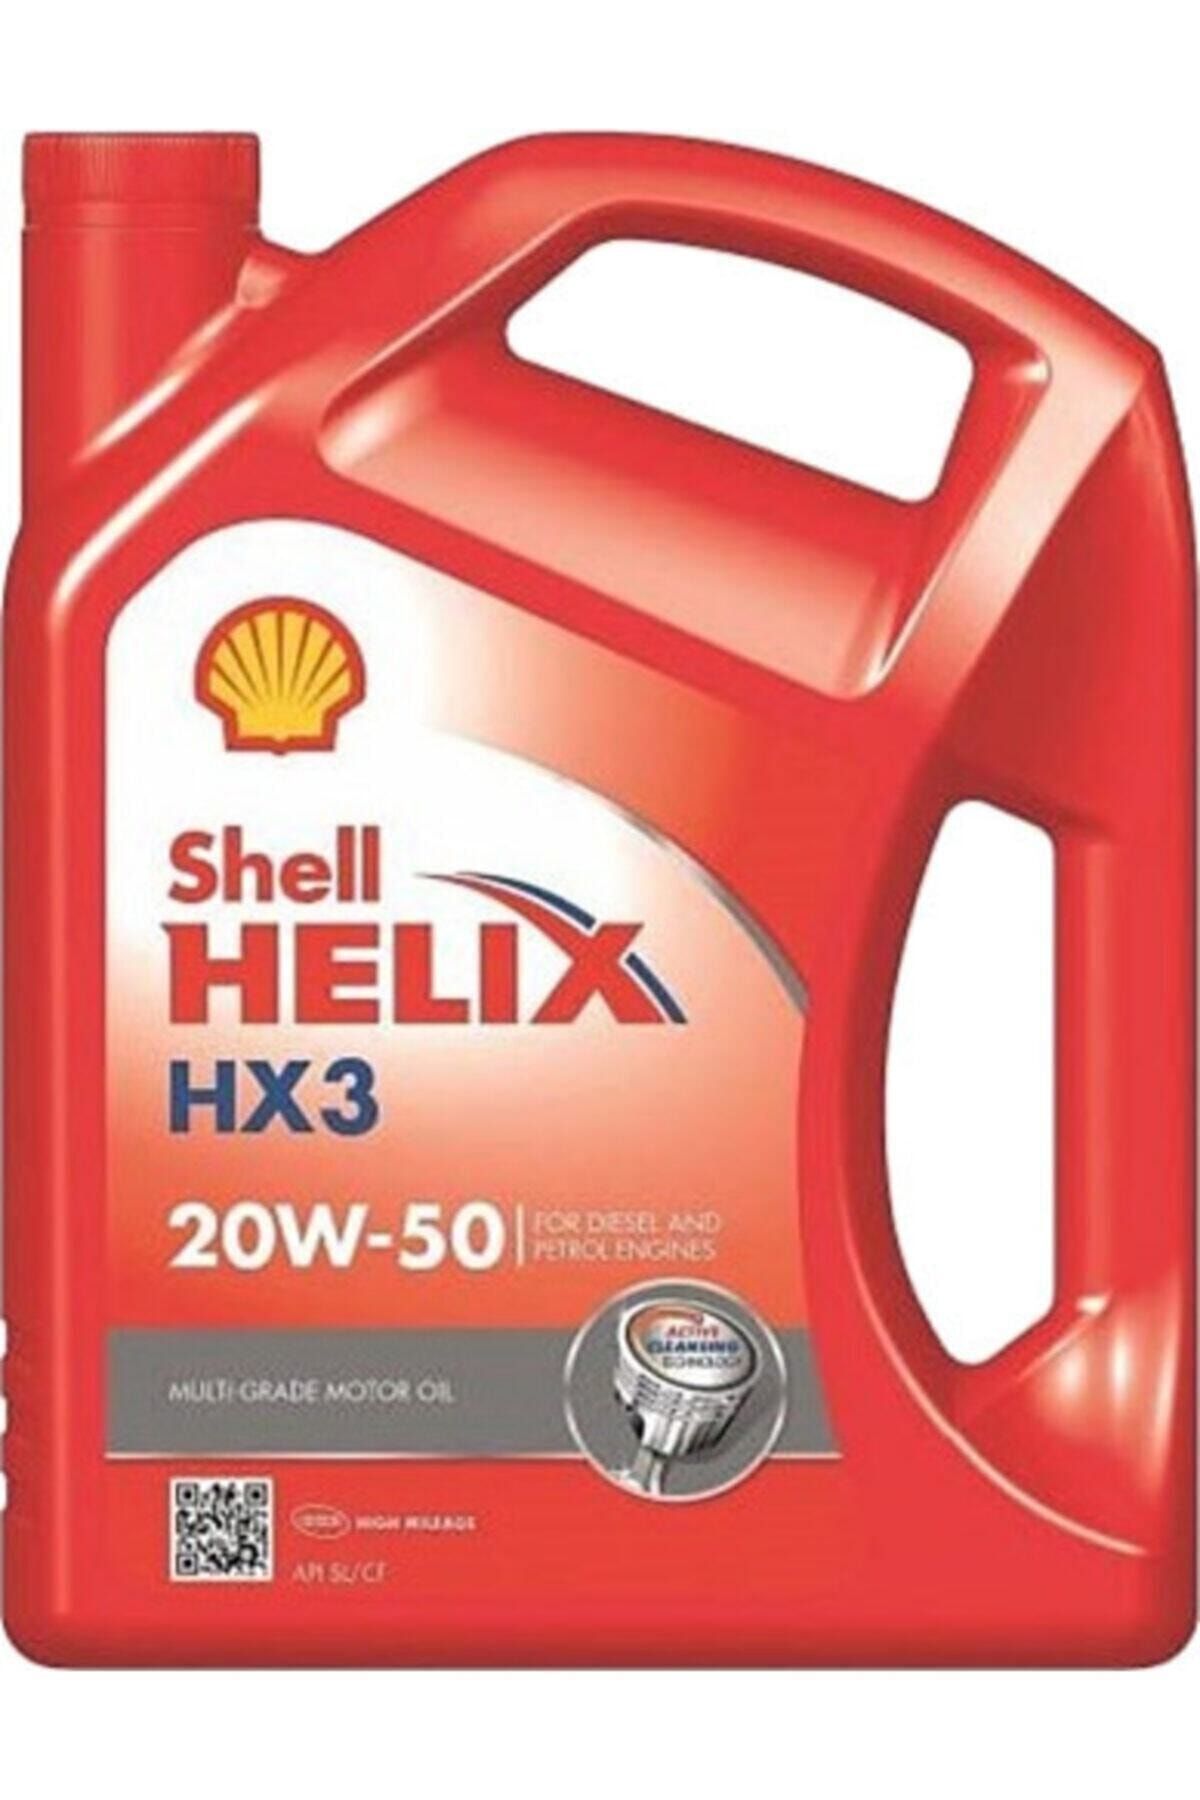 Shell Helix Hx3 20w-50 4 Litre Motor Yağı